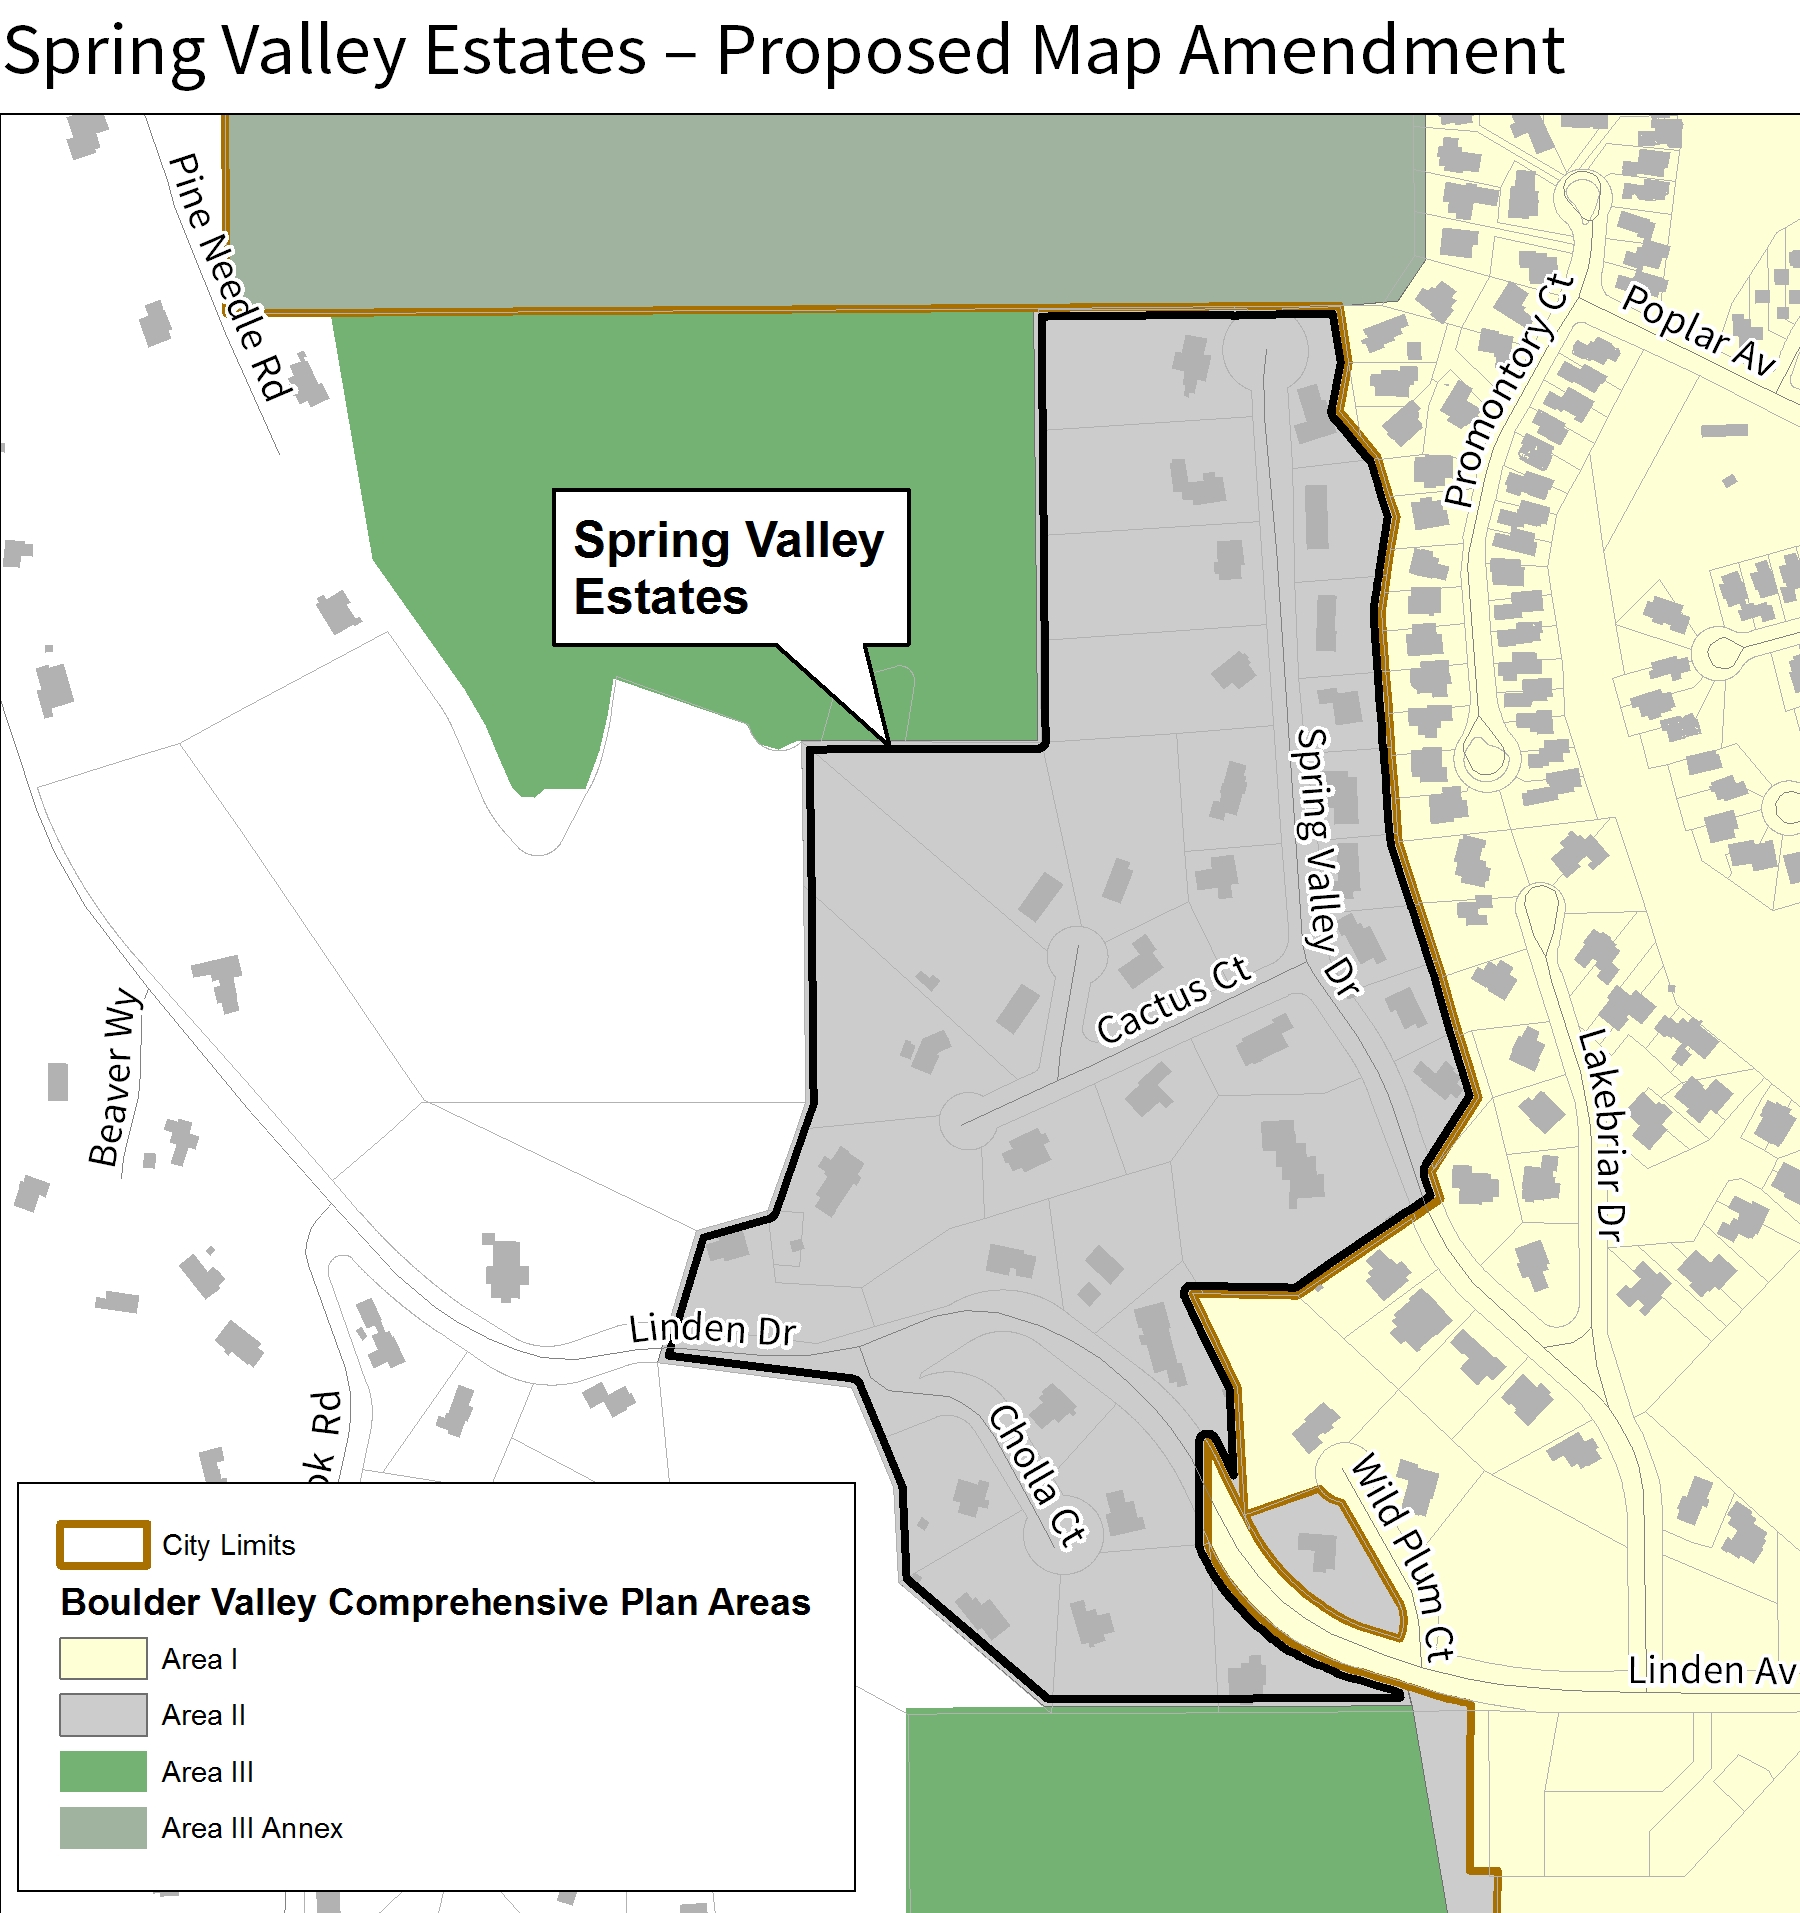 Proposed Planning Area Designation:  Area II